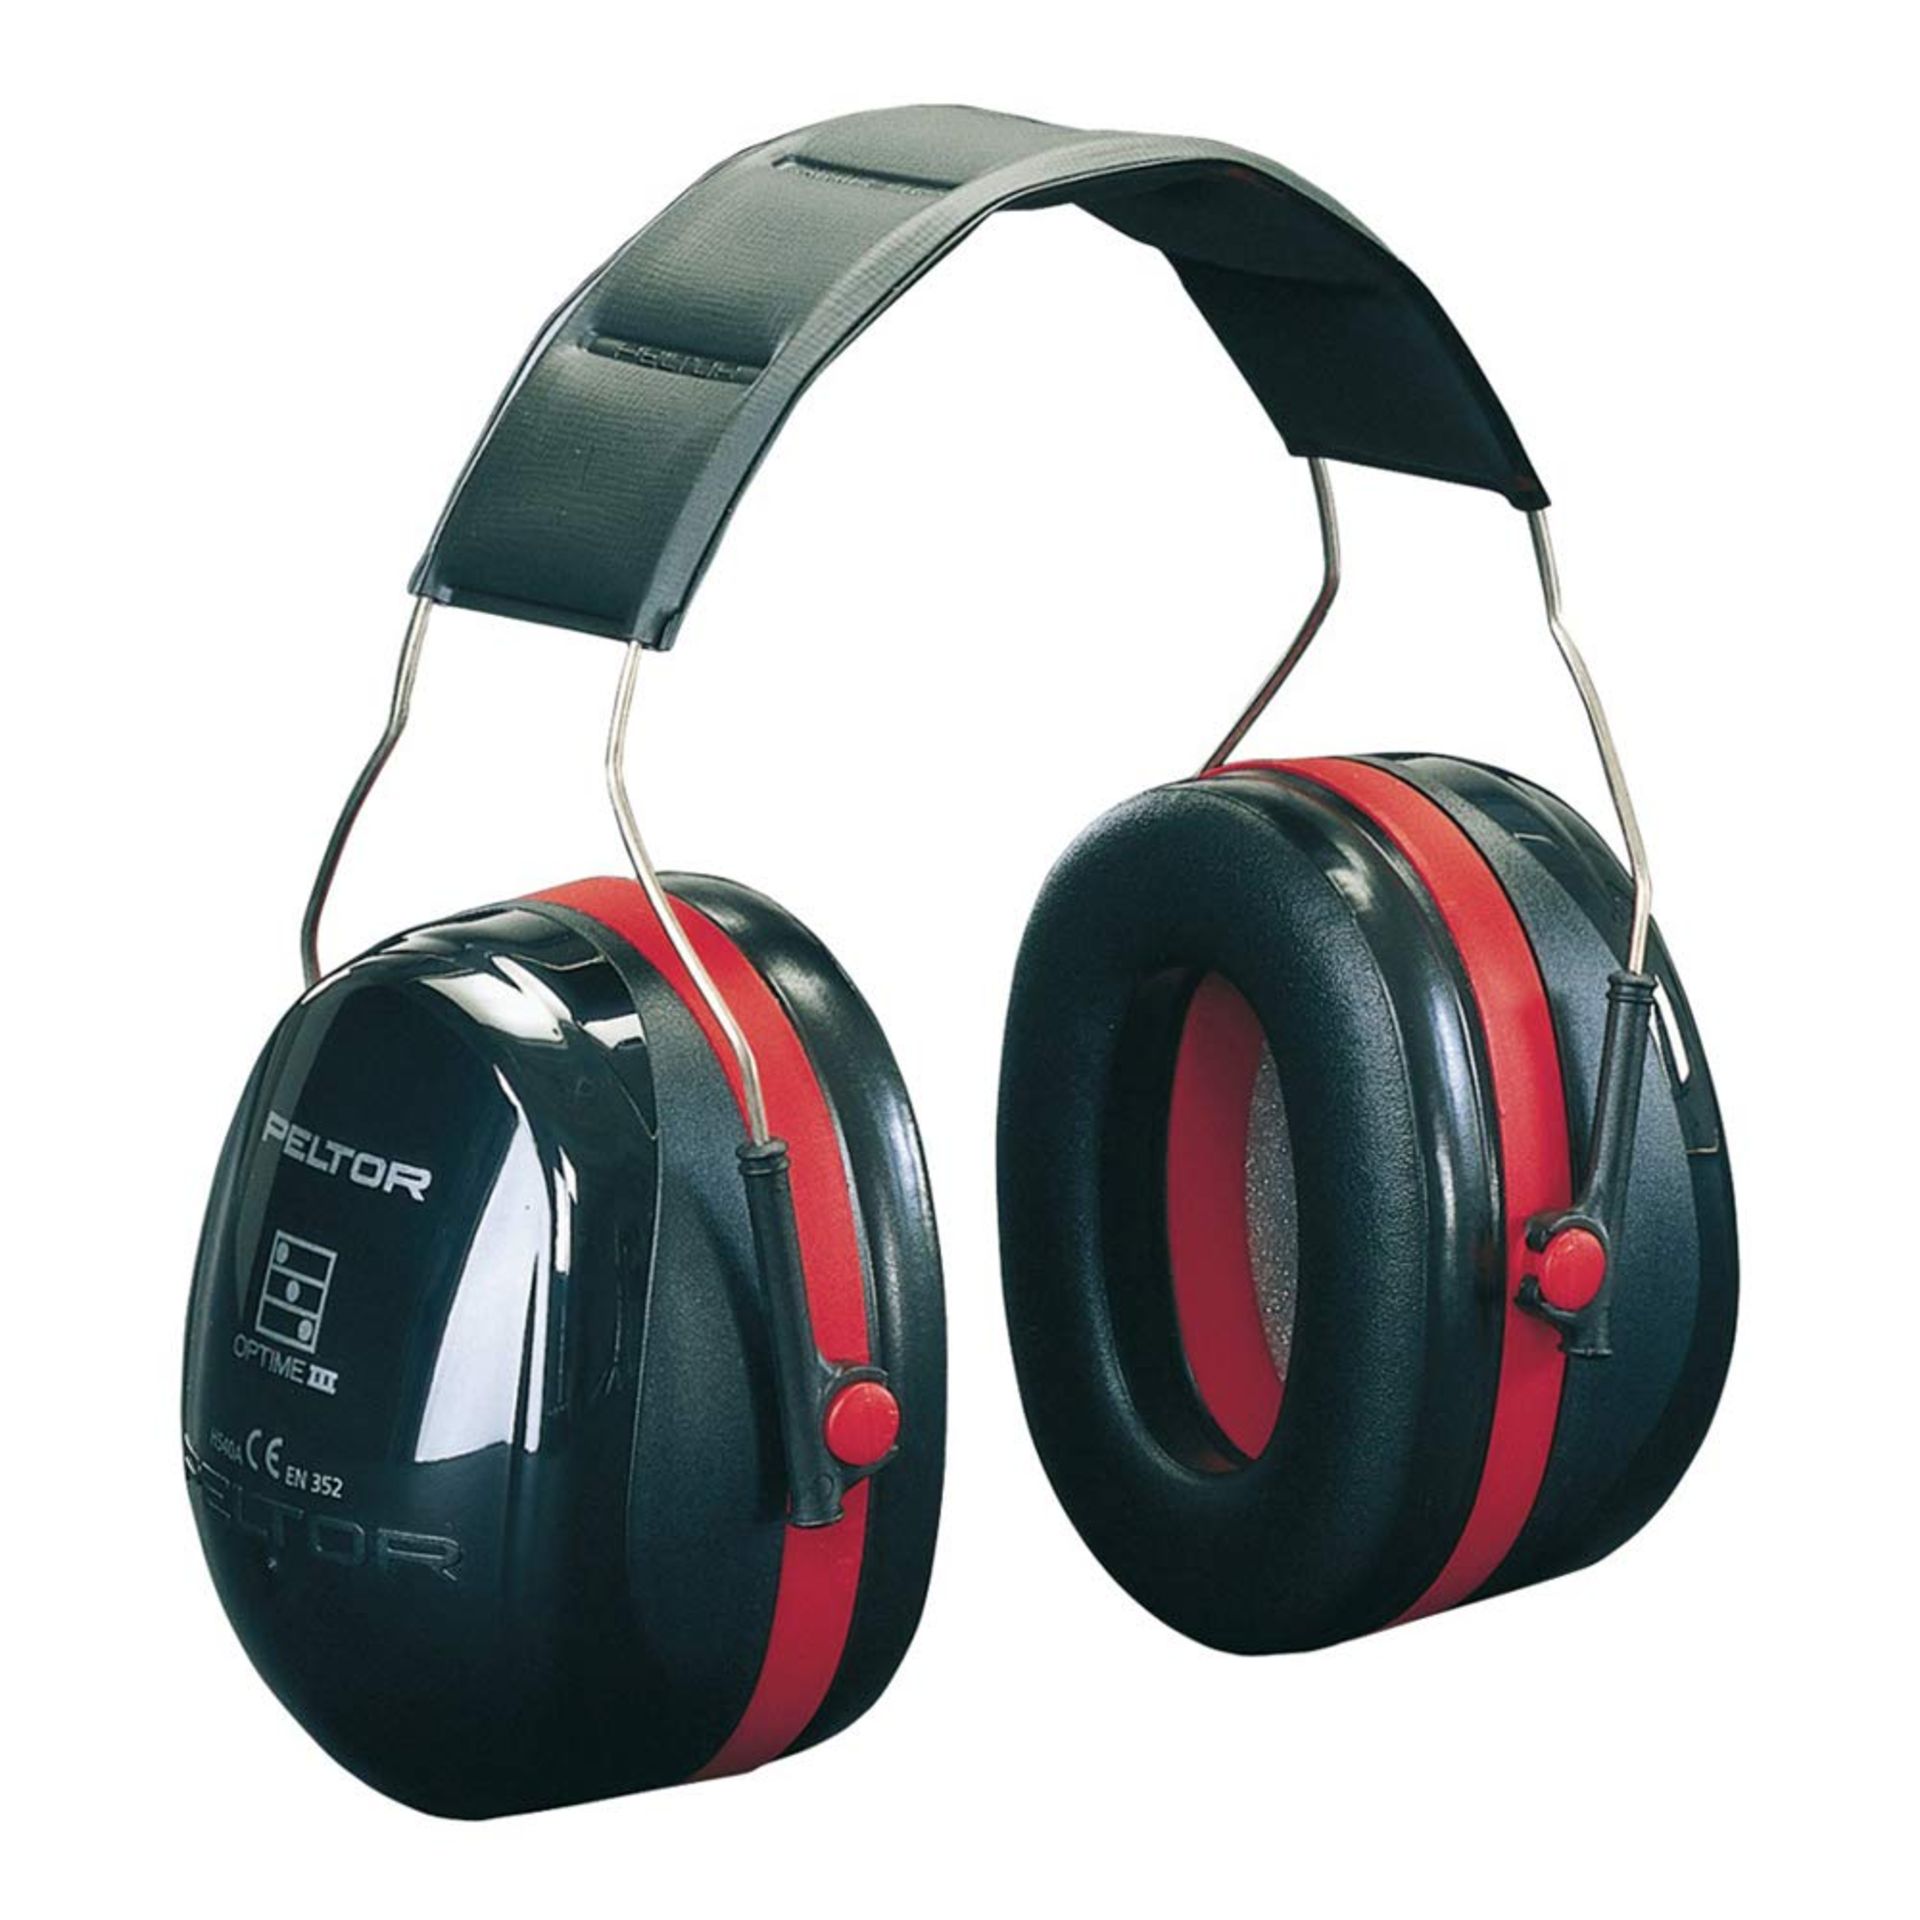 GRADE B - 3M Peltor Optime III Earmuffs with Headband, 35 dB, Black/RedRRP £21.49Condition